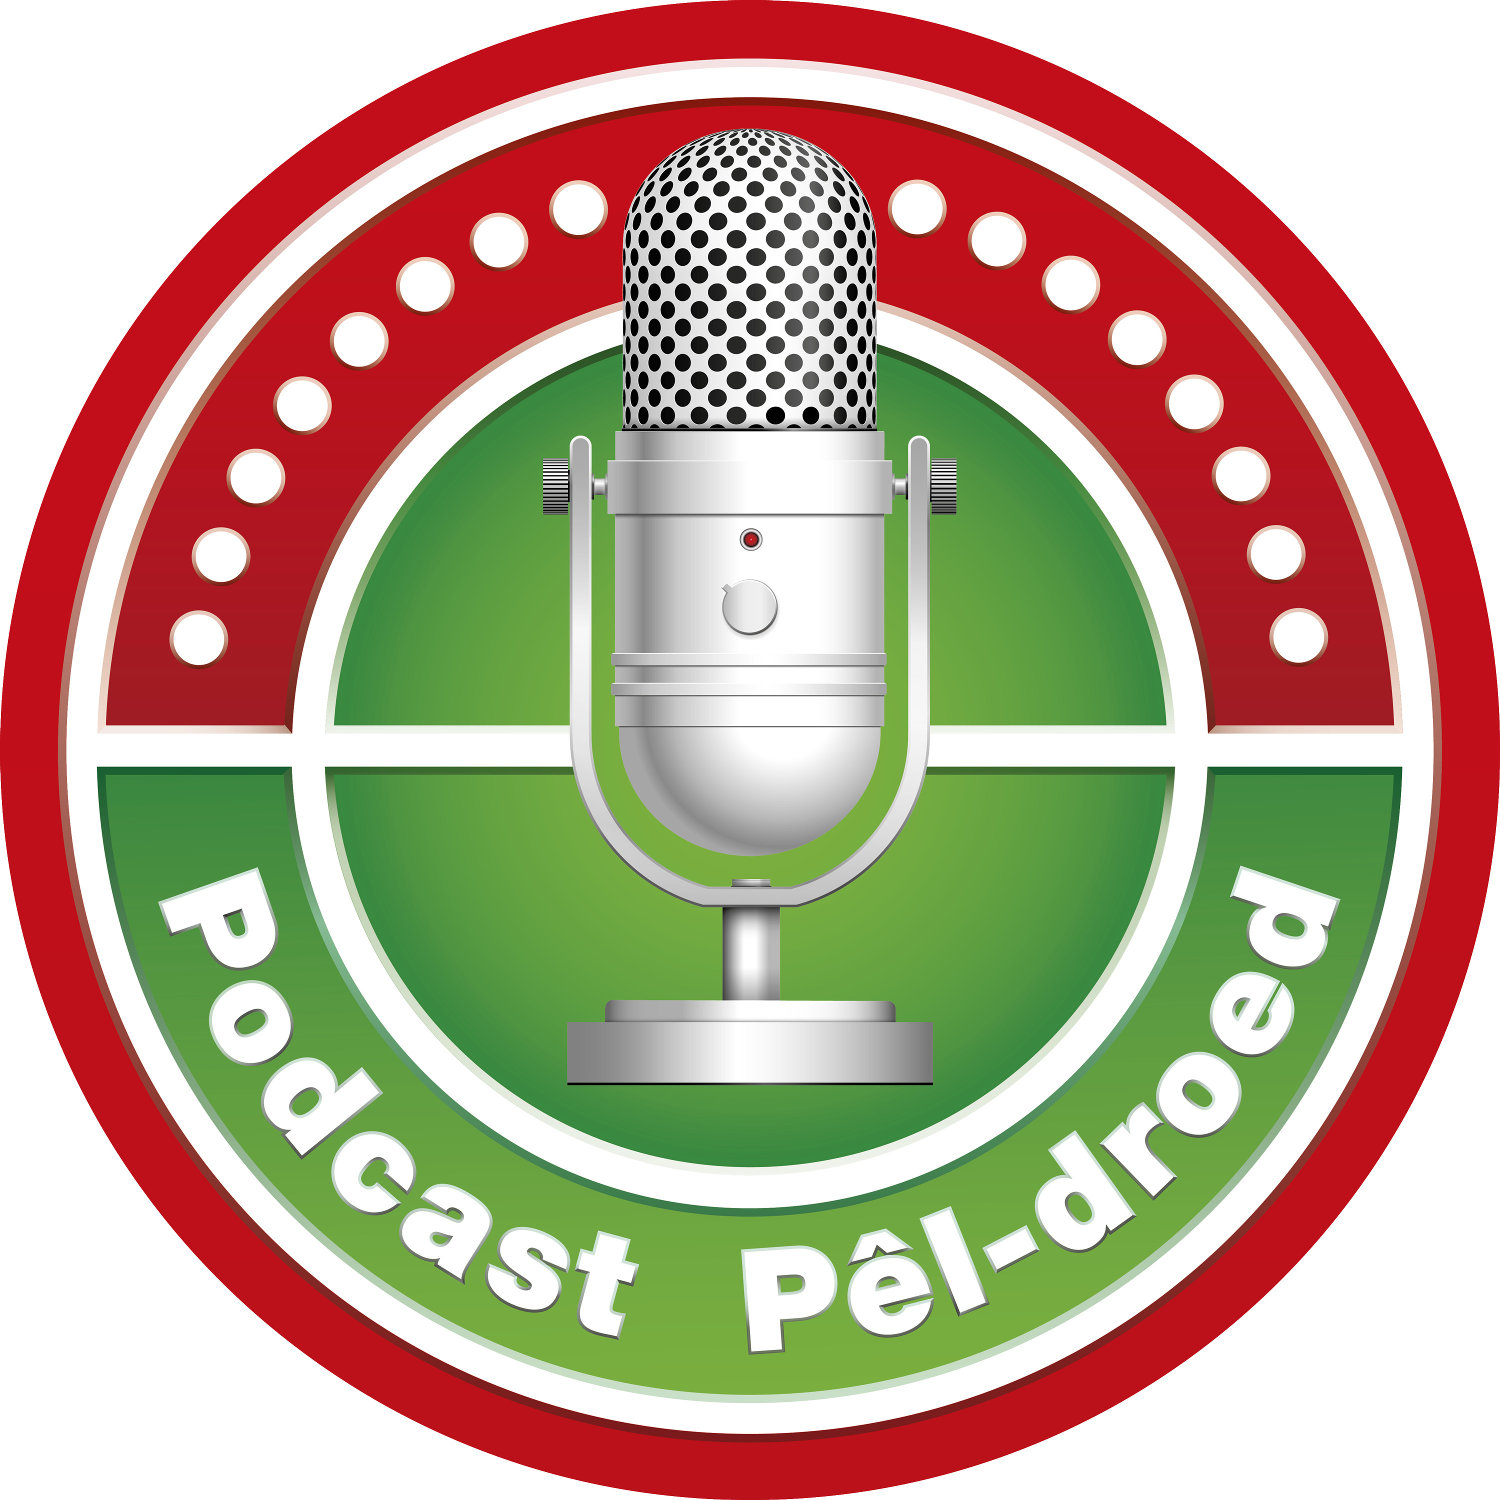 Podcast Pêl-droed